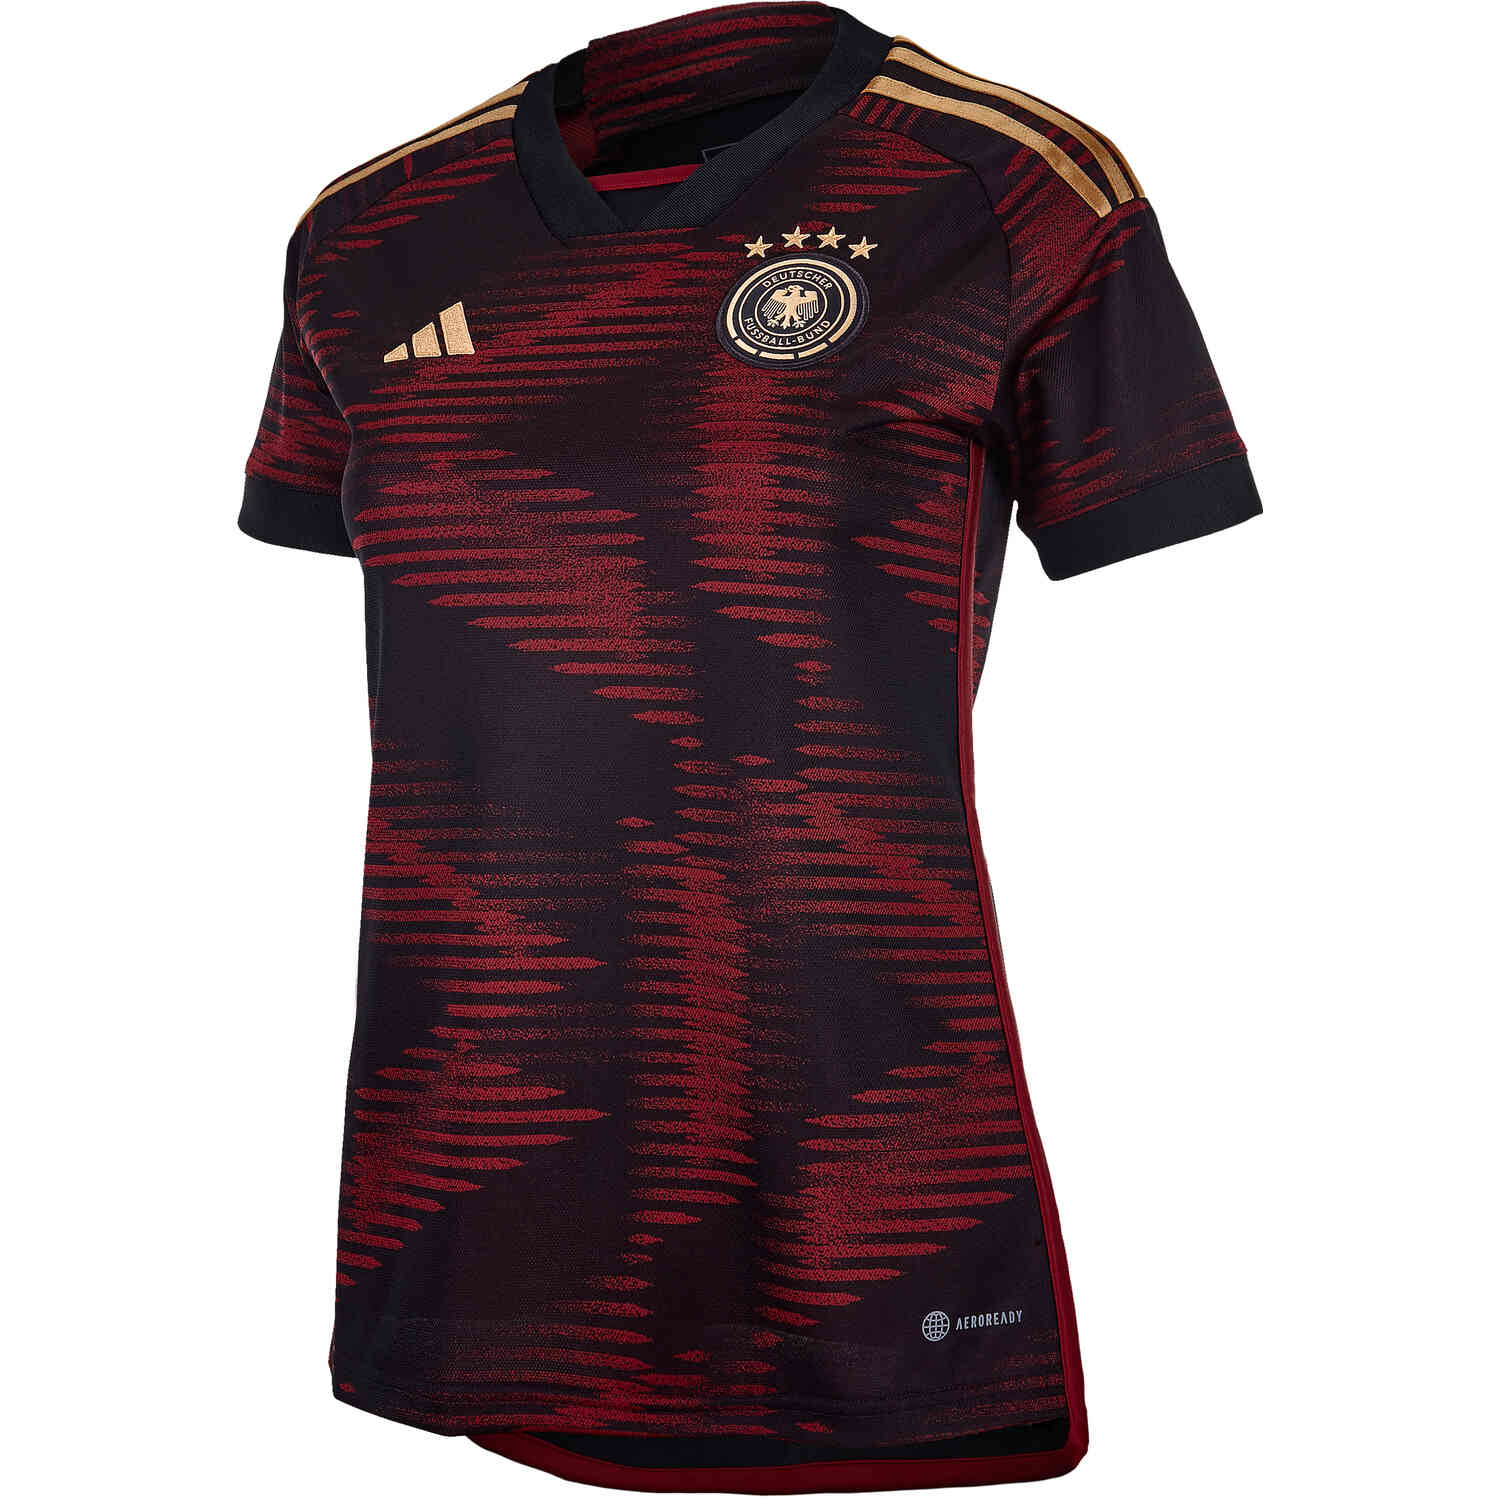 Adidas Shirt Womens M Medium Fifa World Cup Brazil Soccer Short Sleeve  Futbol